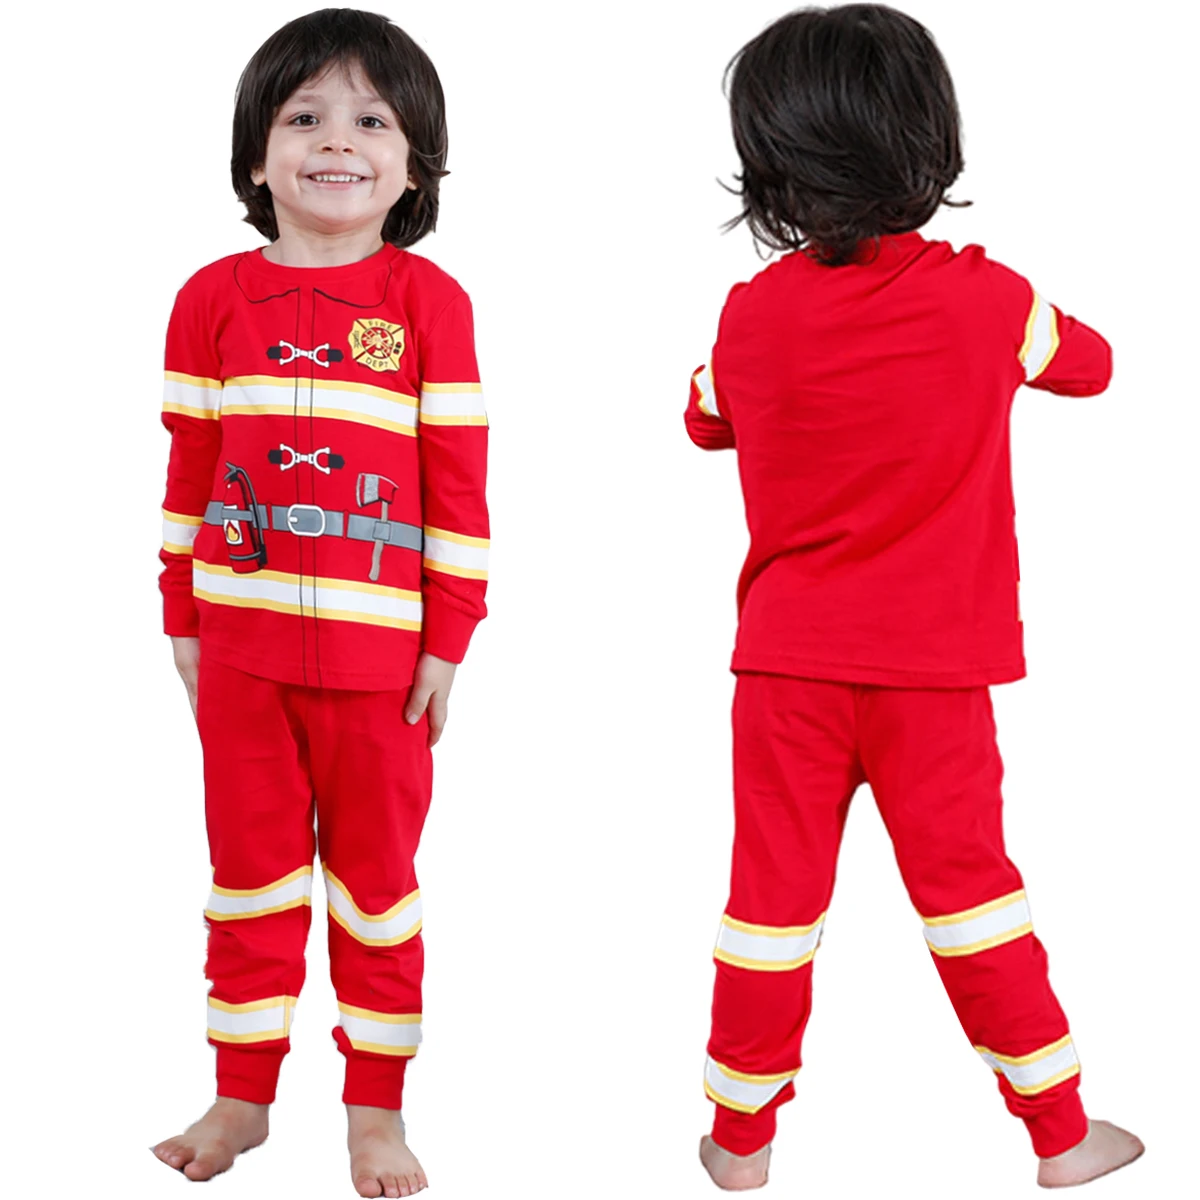 A&J DESIGN Kids Boys Pajamas Set 100% Cotton Sleepwear 